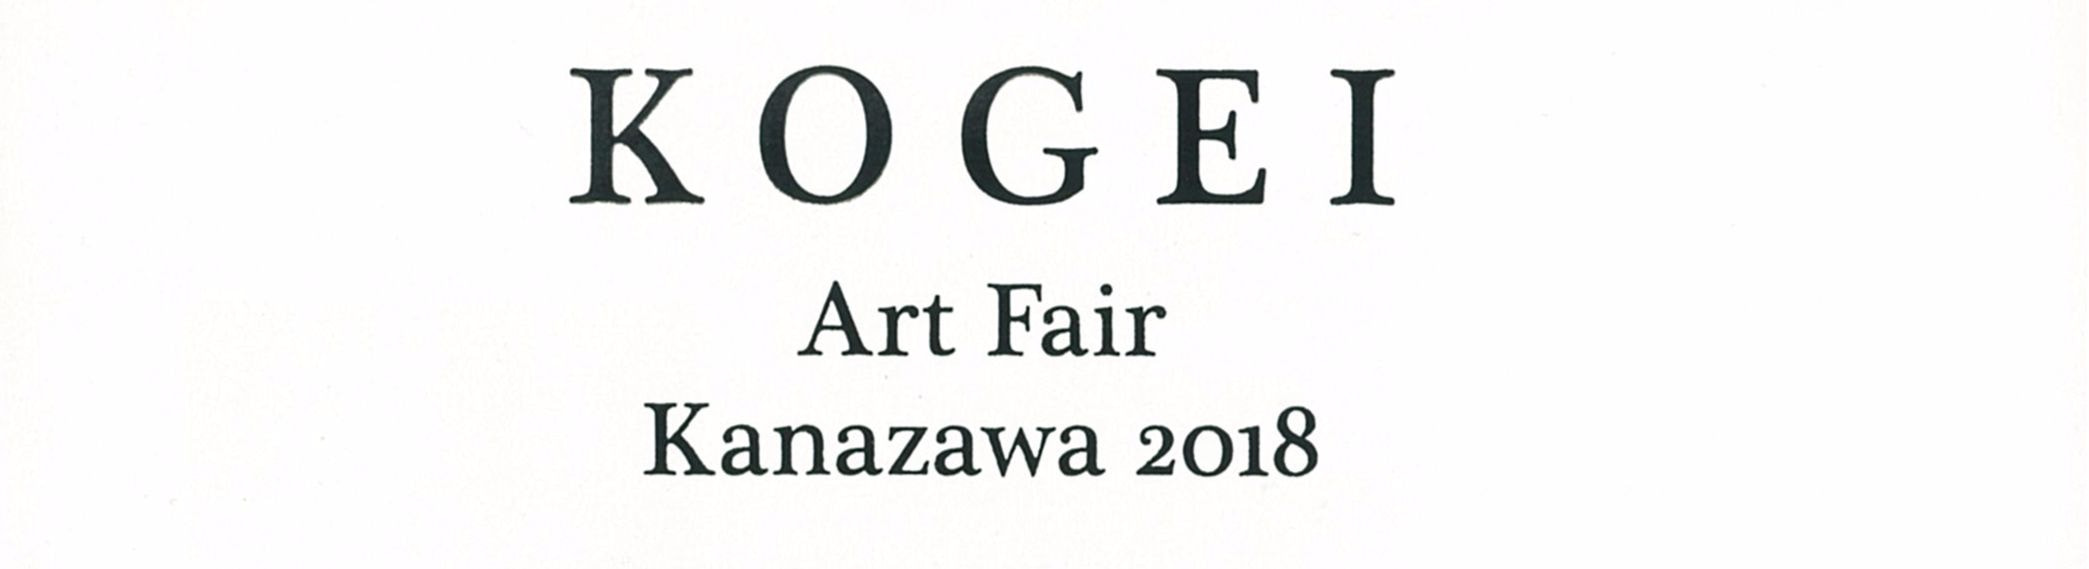 KOGEI Art Fair Kanazawa 2018